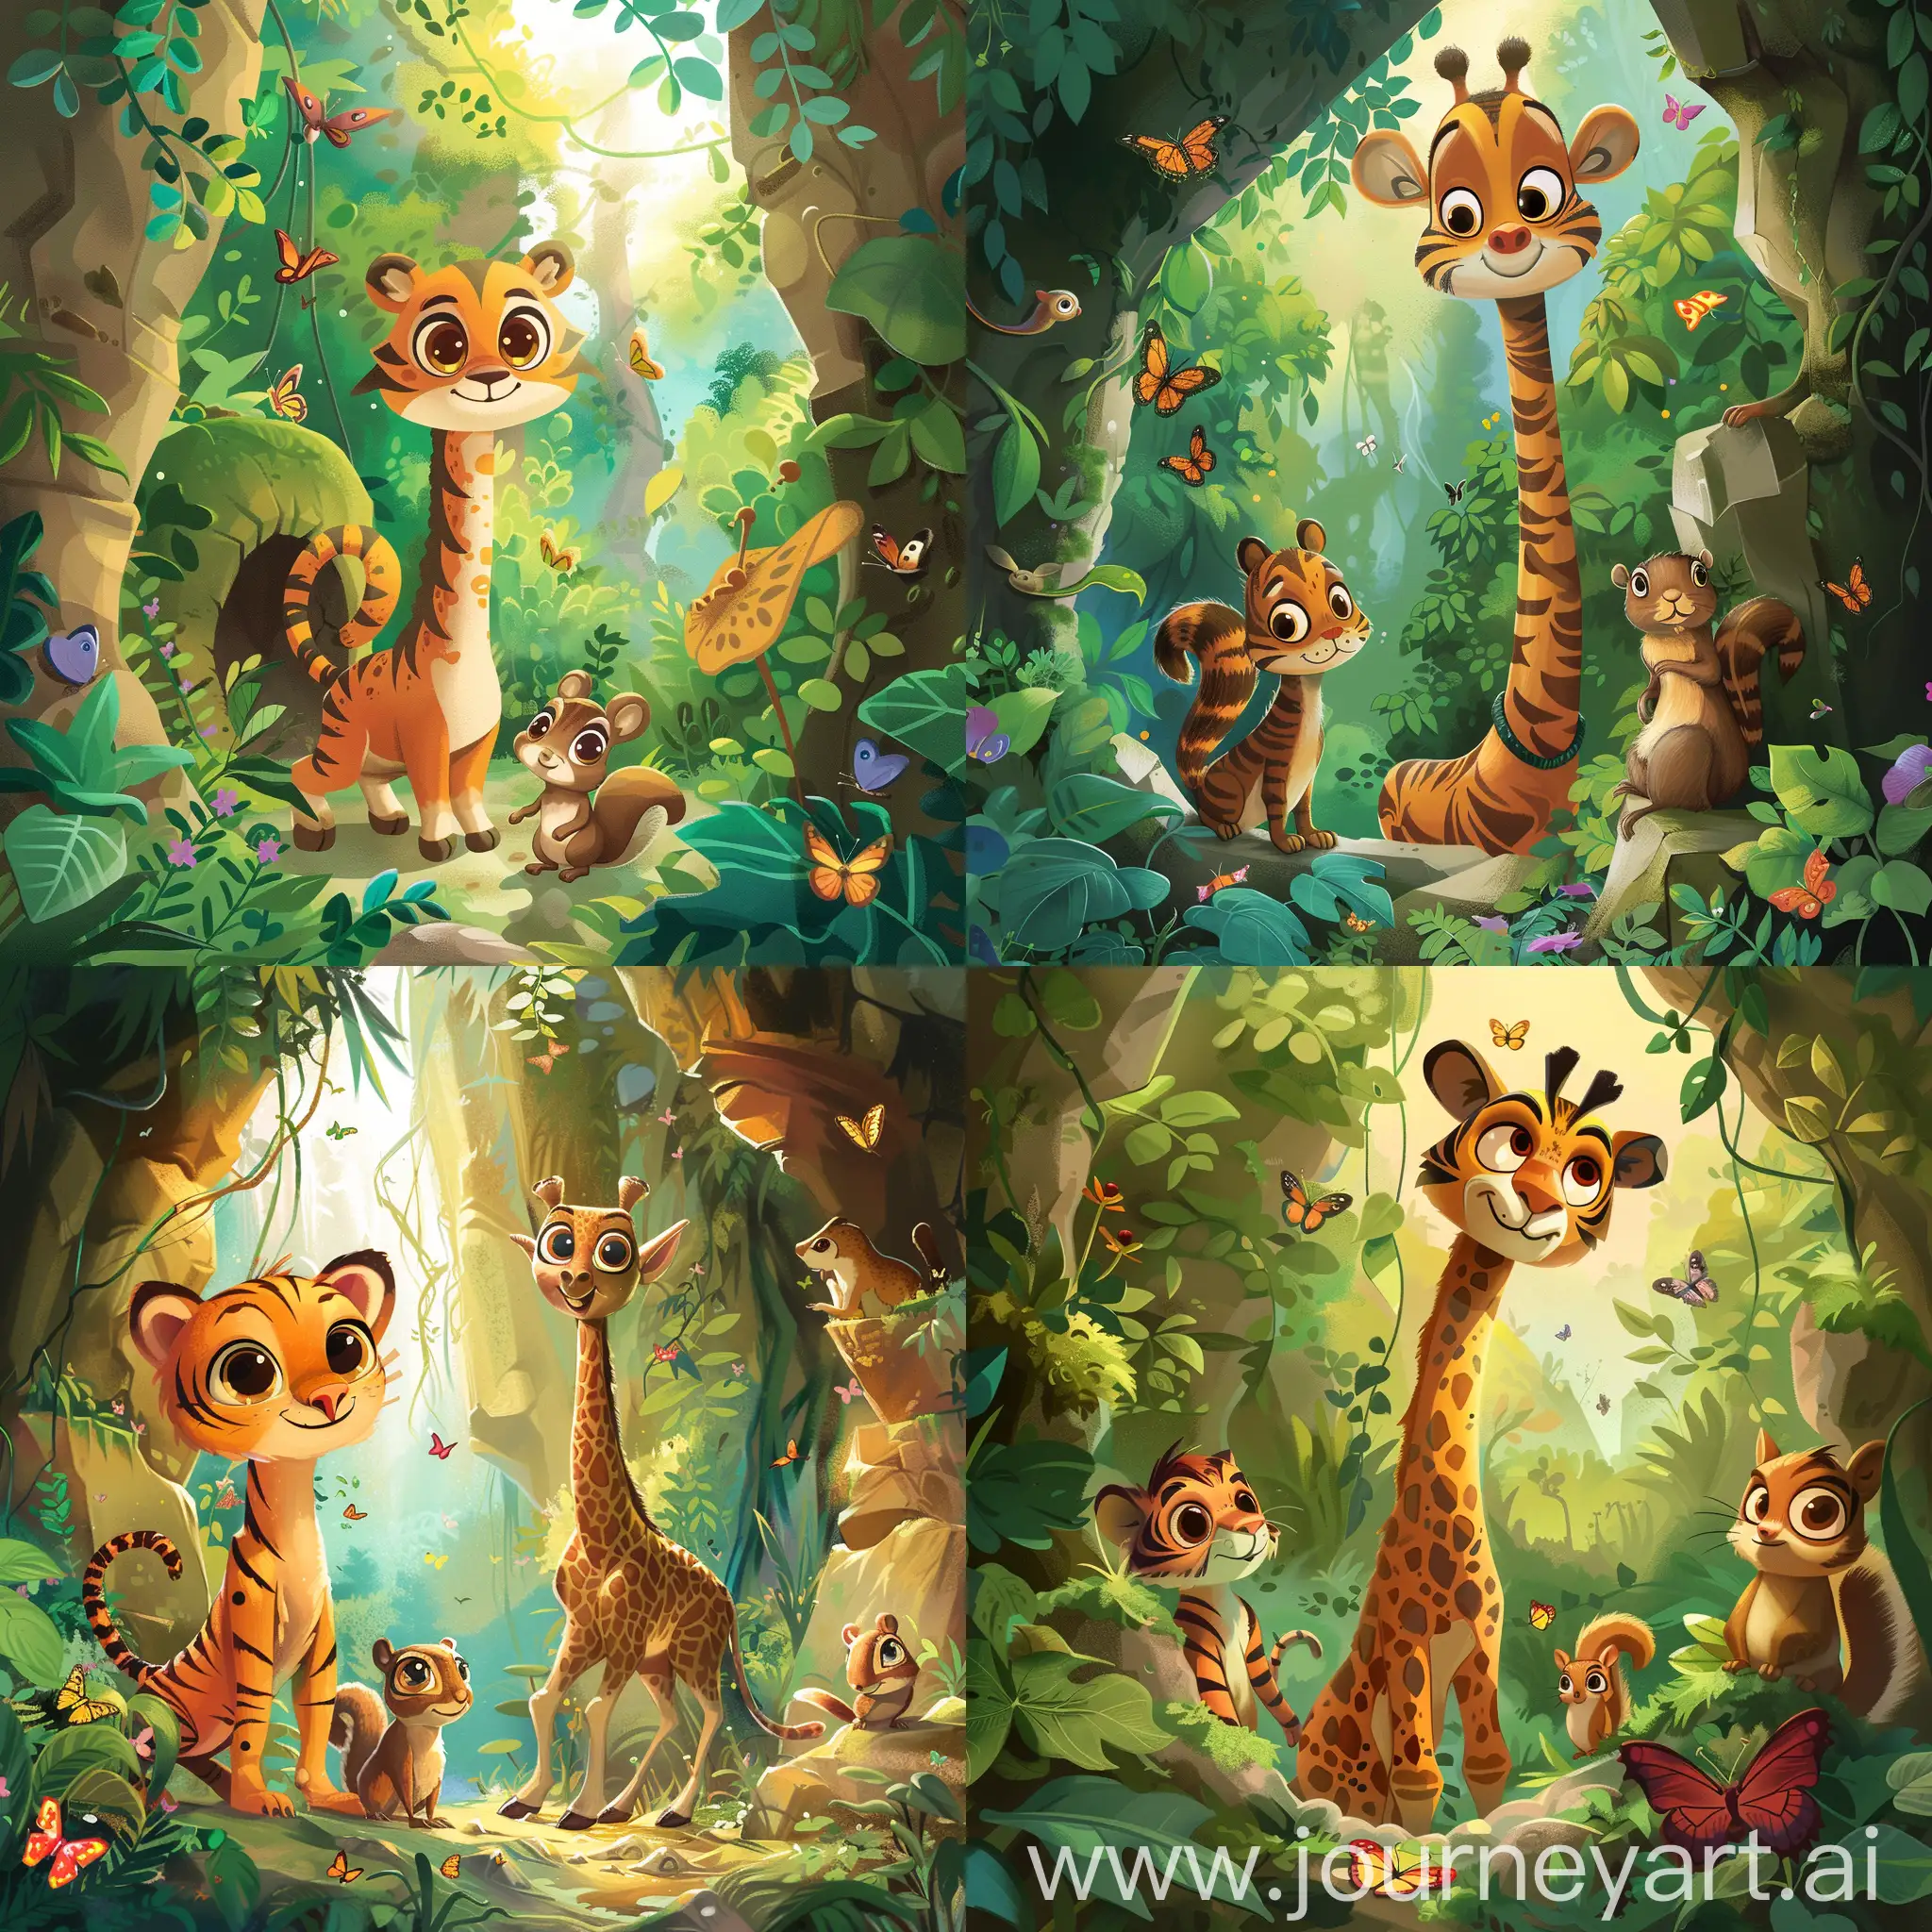 Adventurous-Tiger-Cub-Giraffe-and-Squirrel-Exploring-a-Lush-Forest